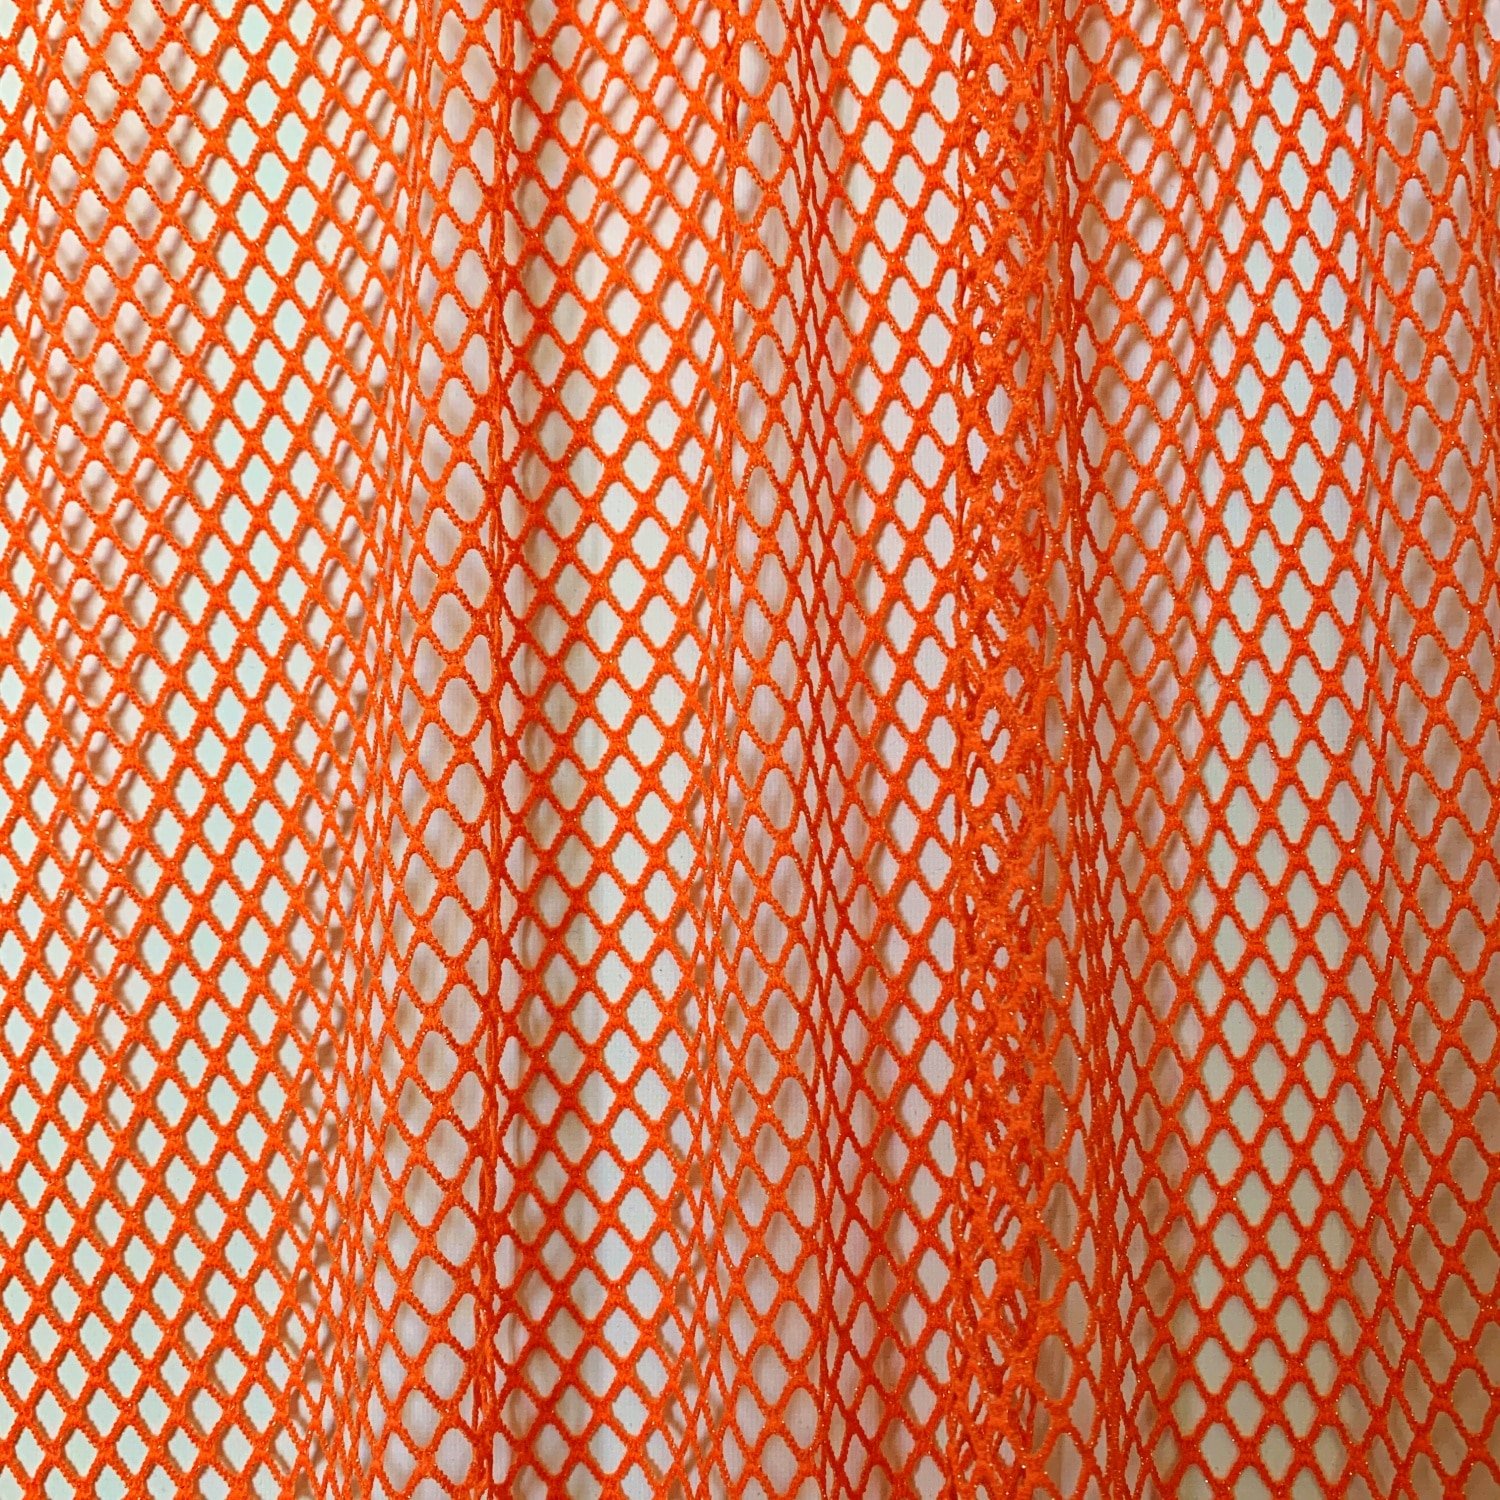 Neon Orange Mesh Fabric with metallic thread